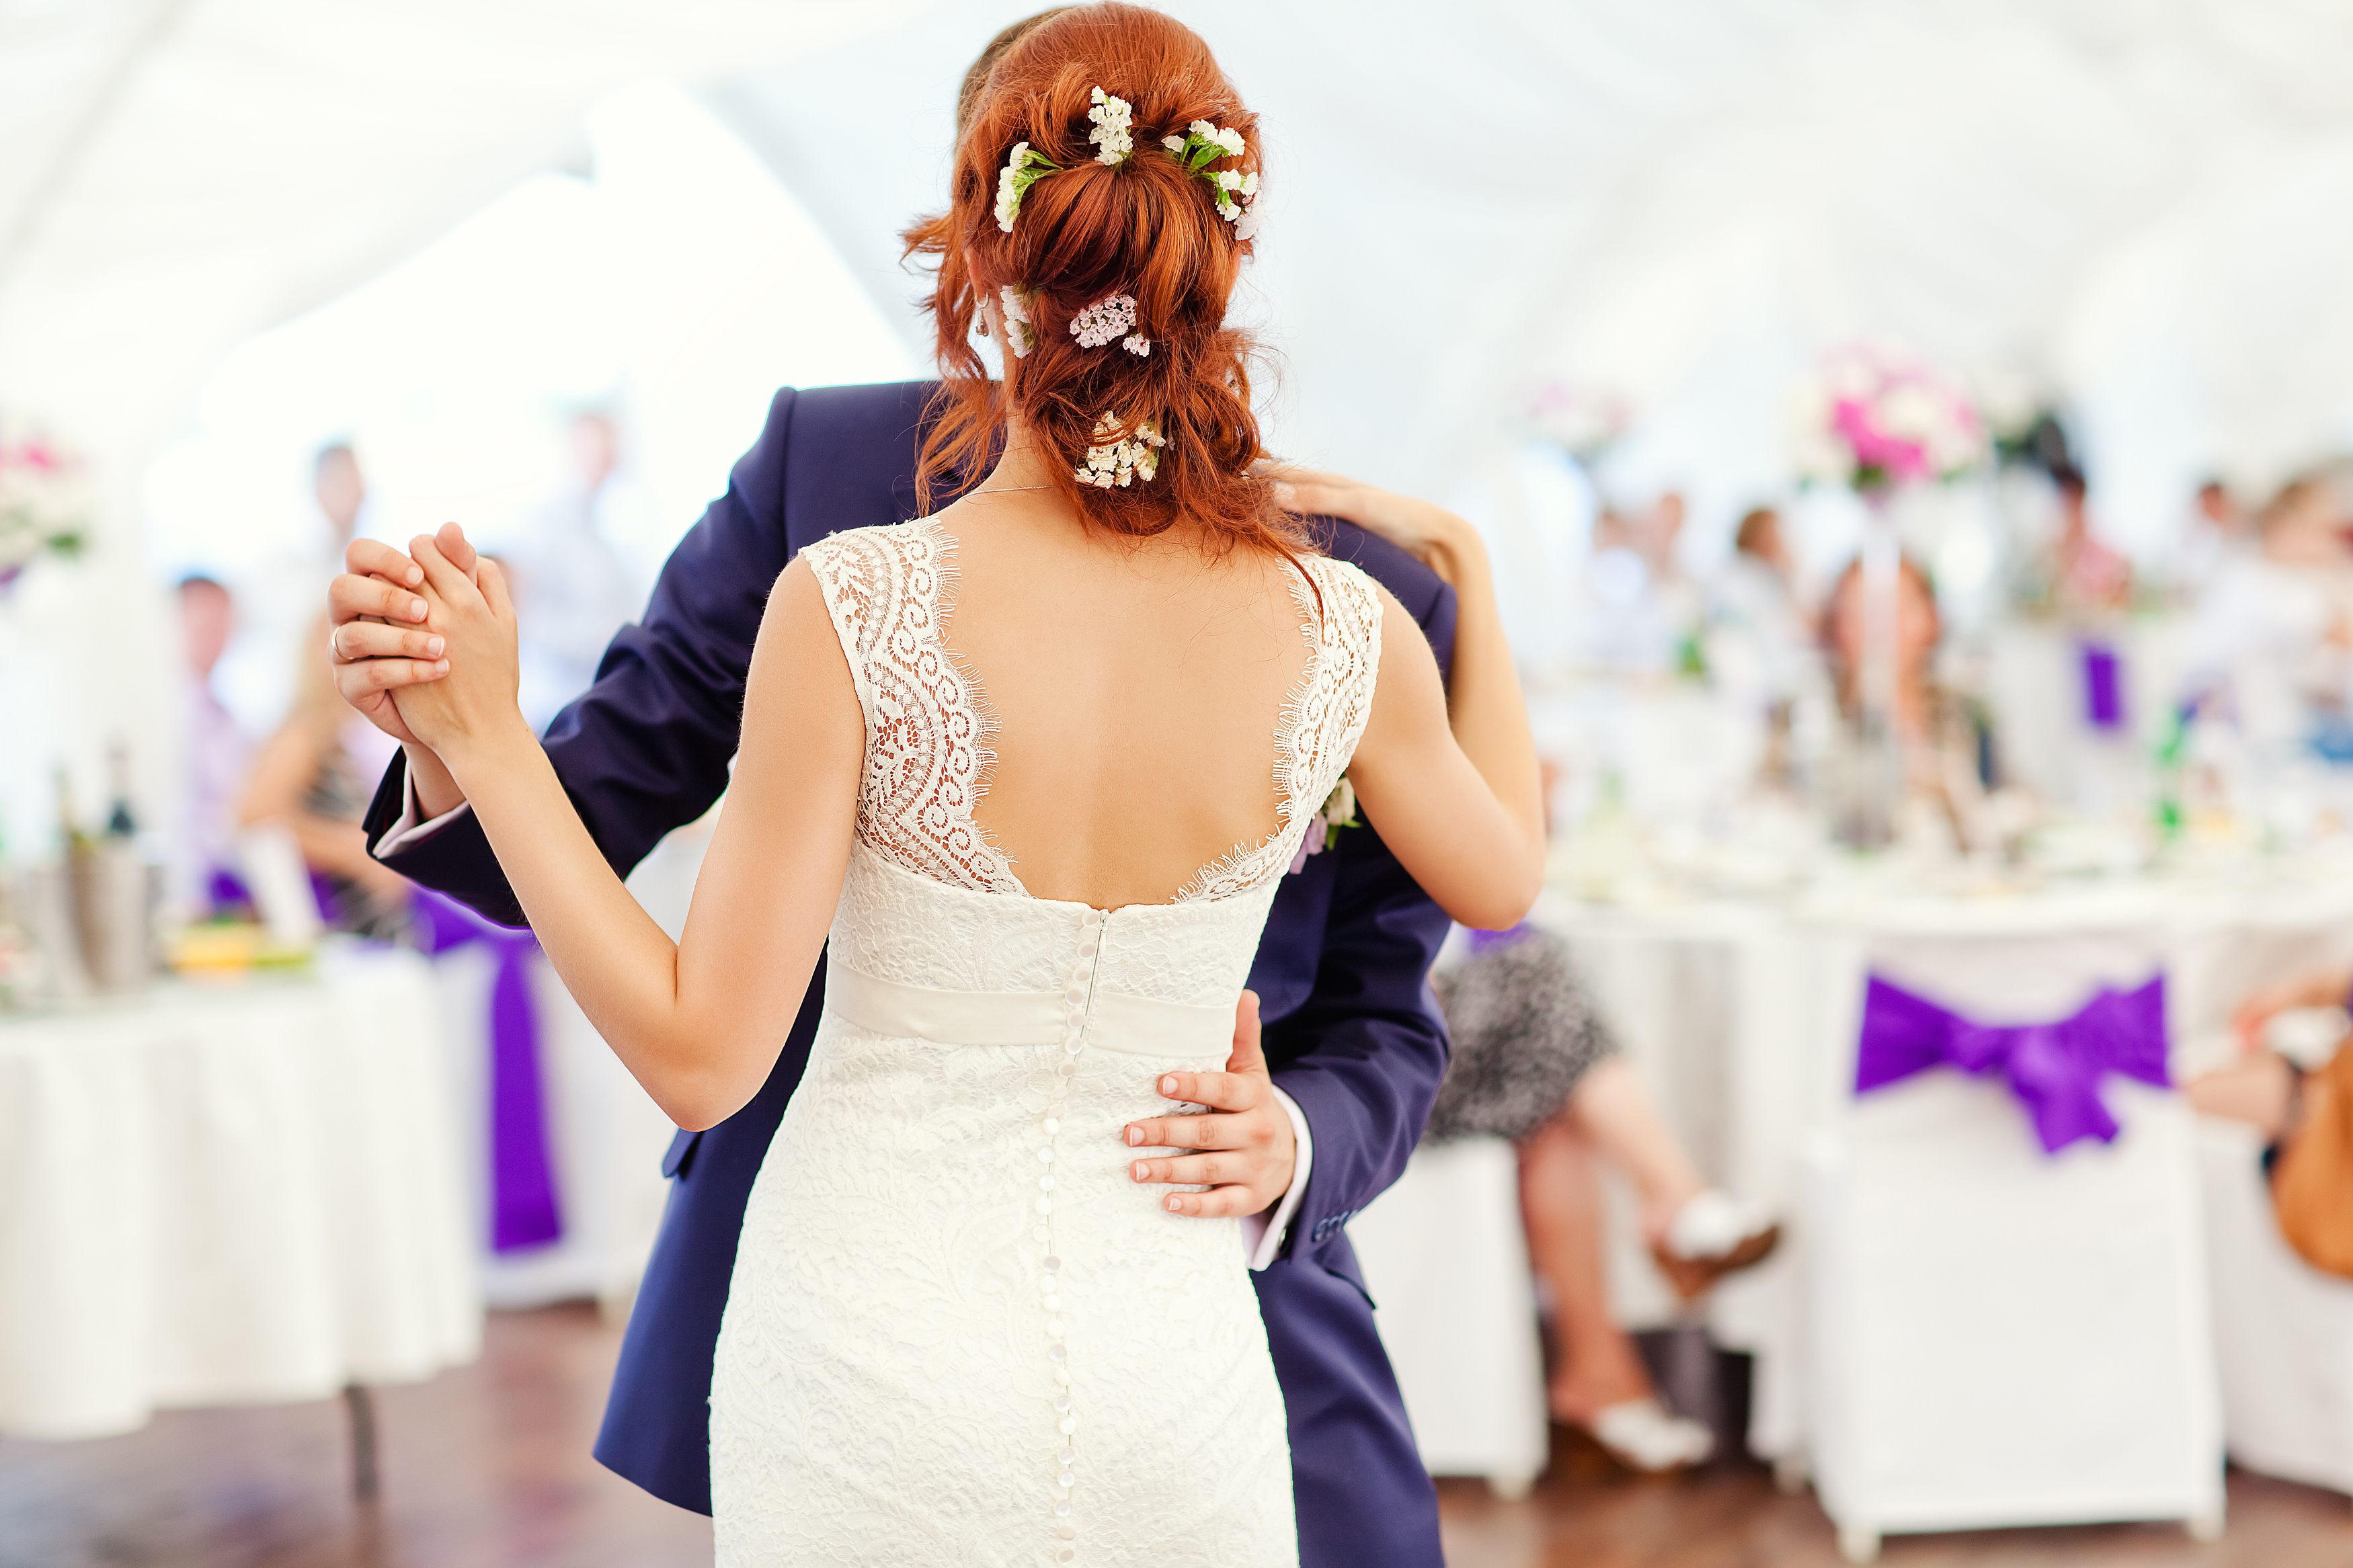 A bride and groom dancing | Source: Shutterstock